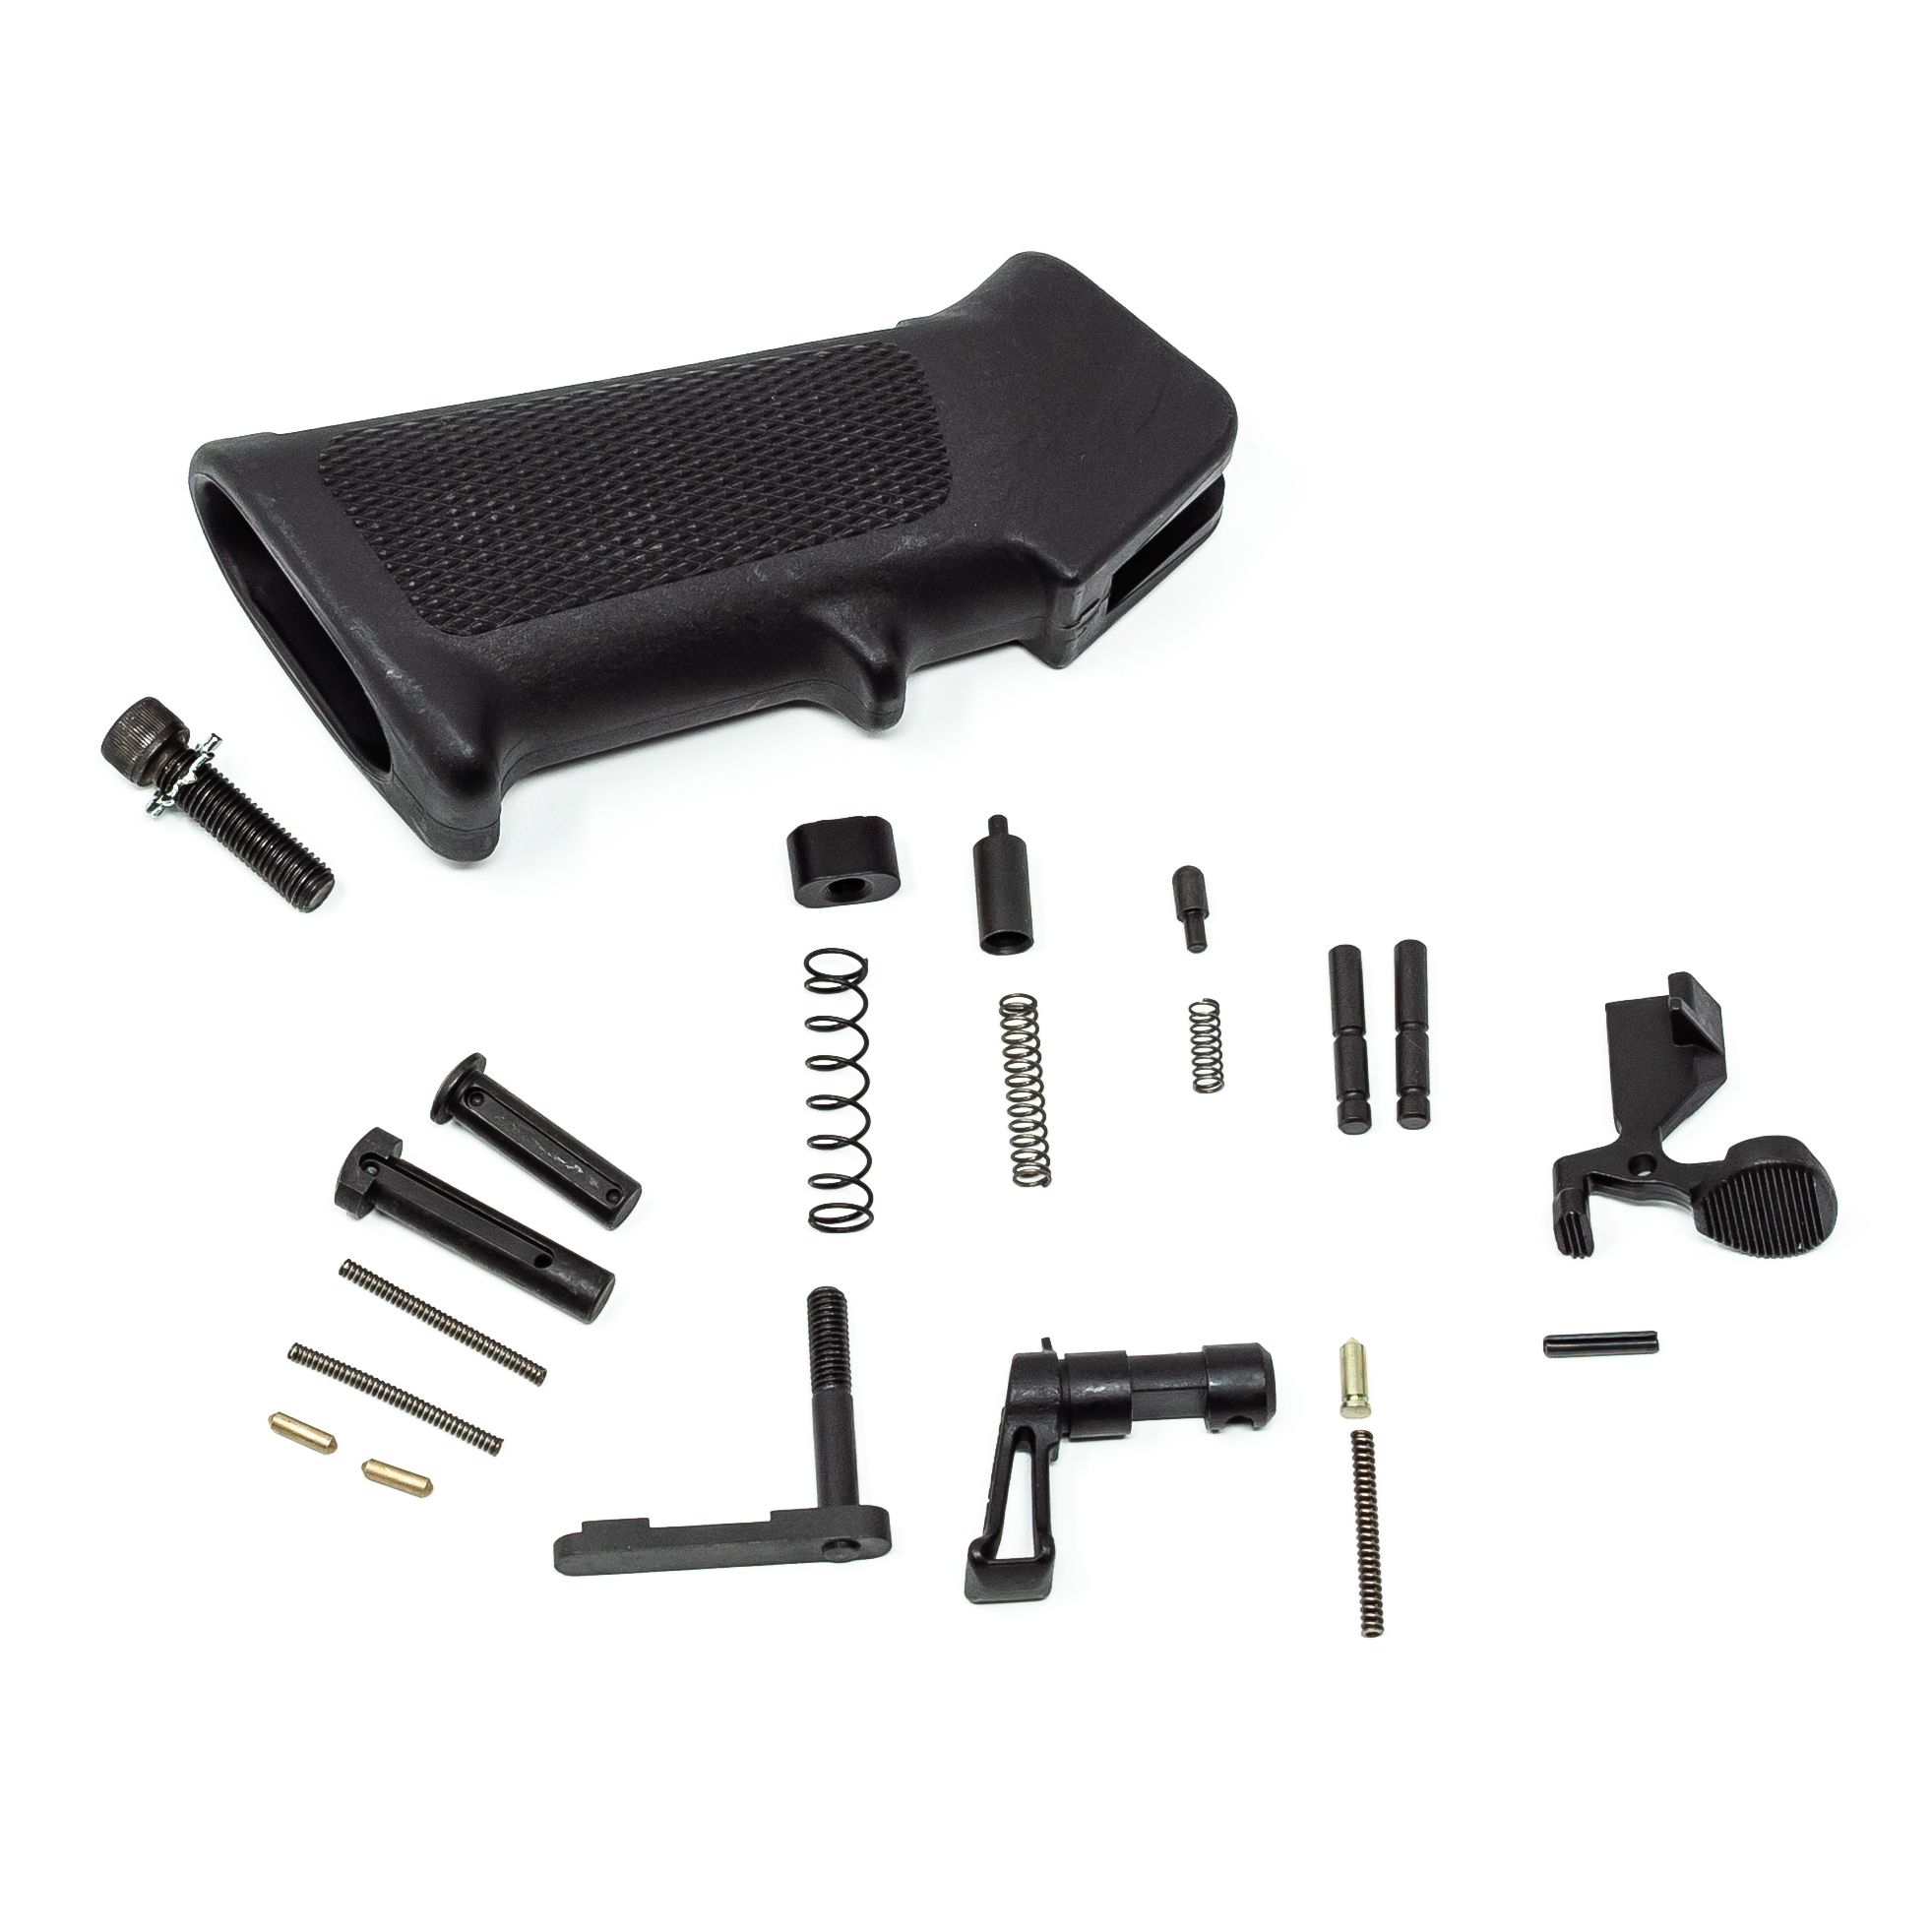 Luth AR Enhanced Lower Parts Kit - 556